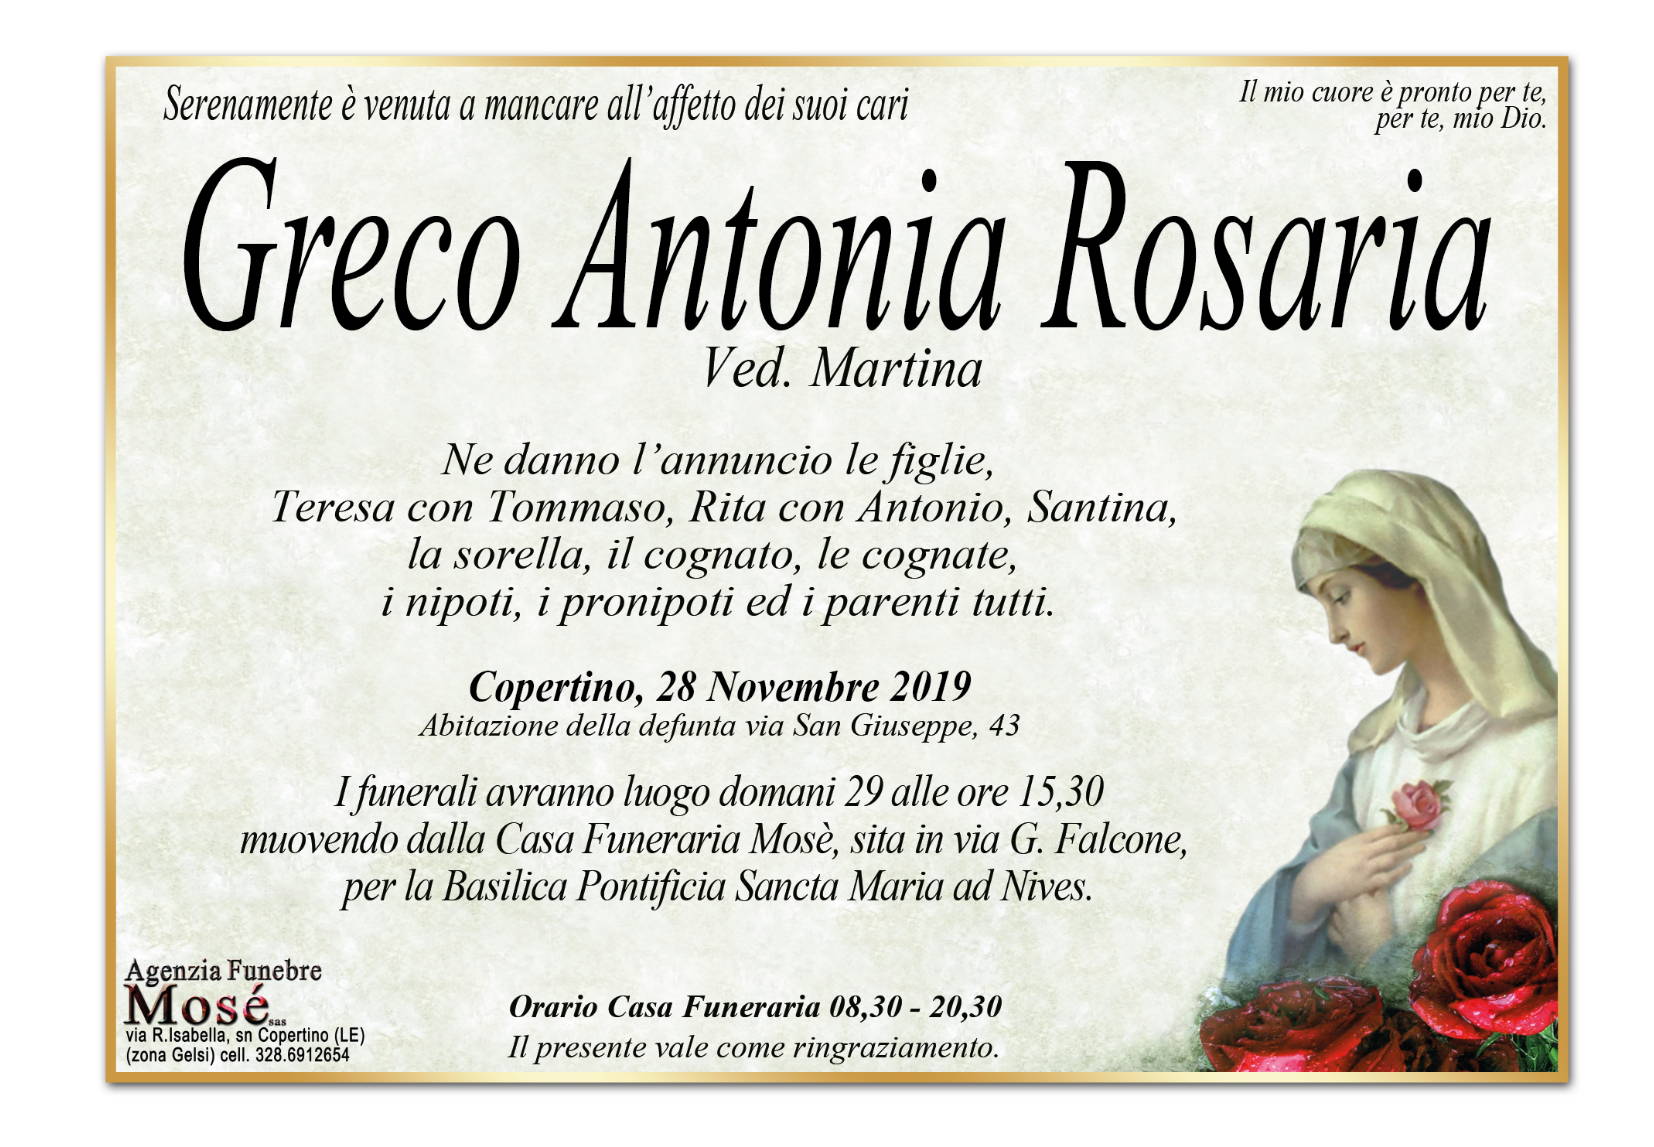 Antonia Rosaria Greco